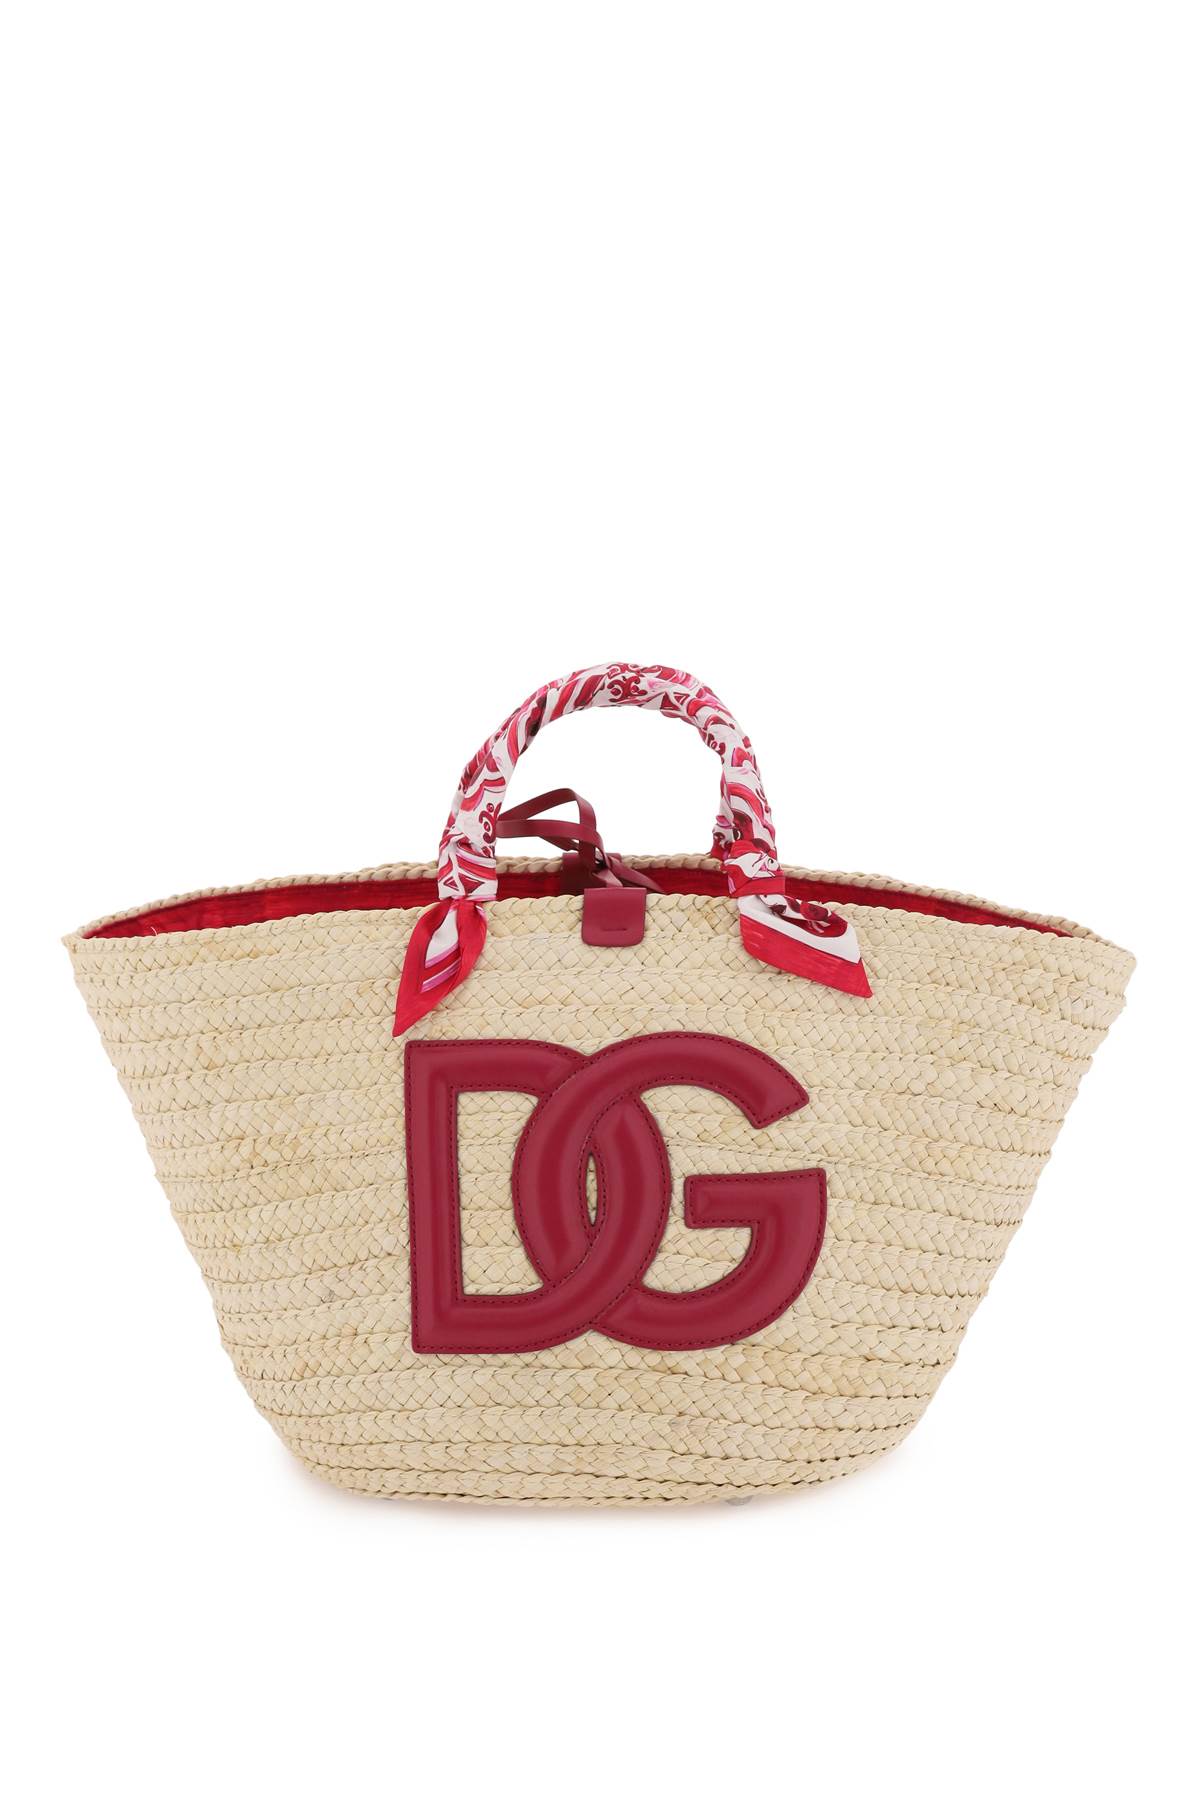 Dolce & Gabbana Large Kendra Shopper Bag In Fuchsia